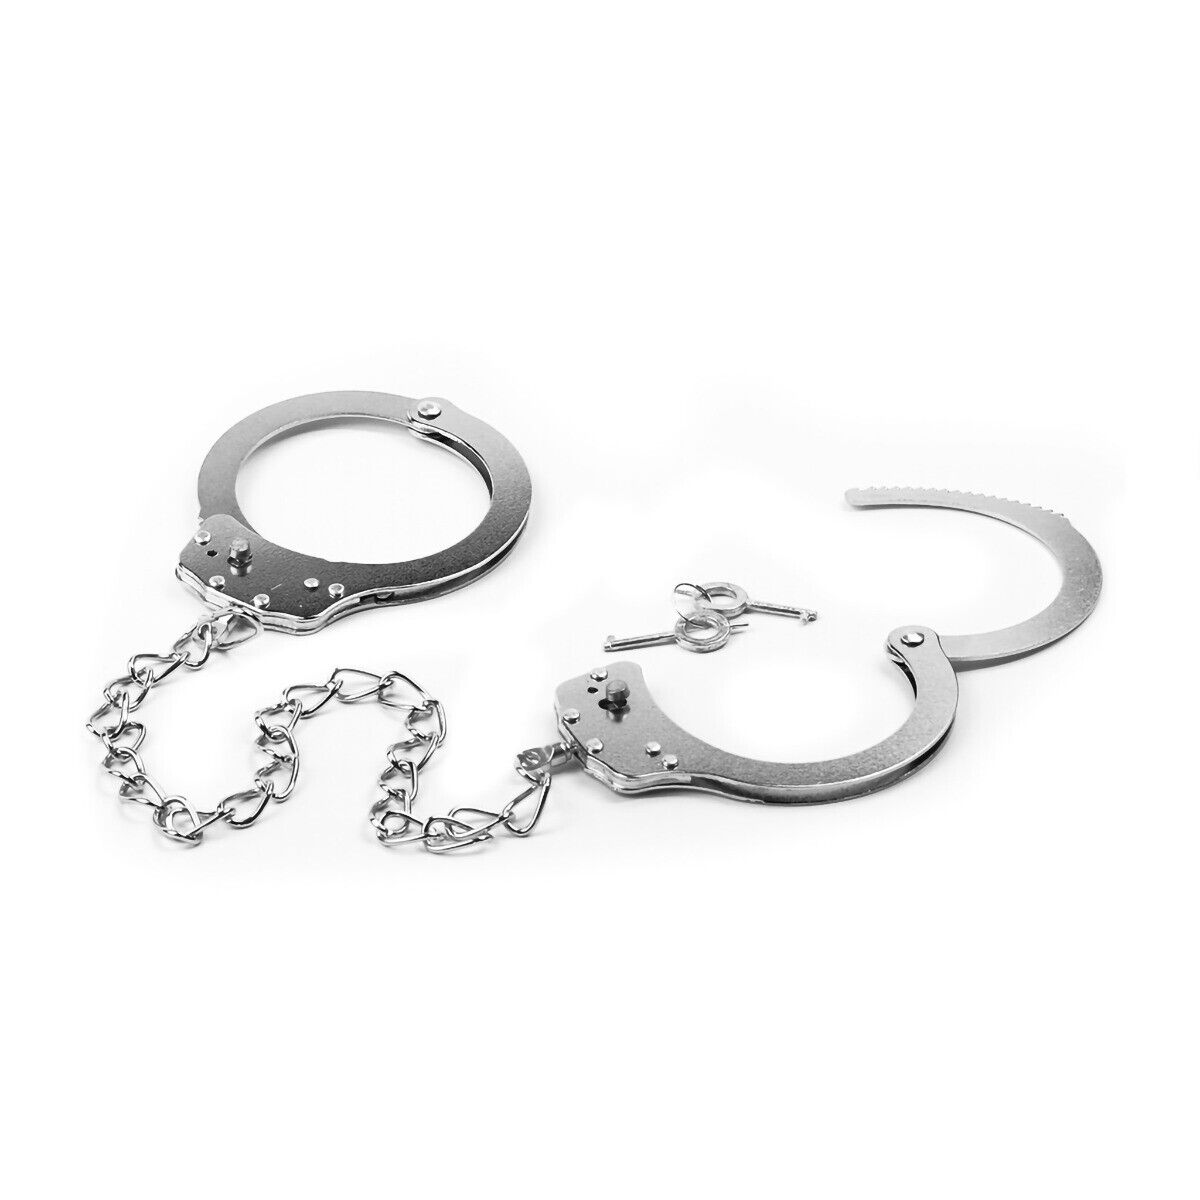 Steel Silver Metal Handcuffs Leg Cuffs Restraint Fetish SM Bondage Sex Toy